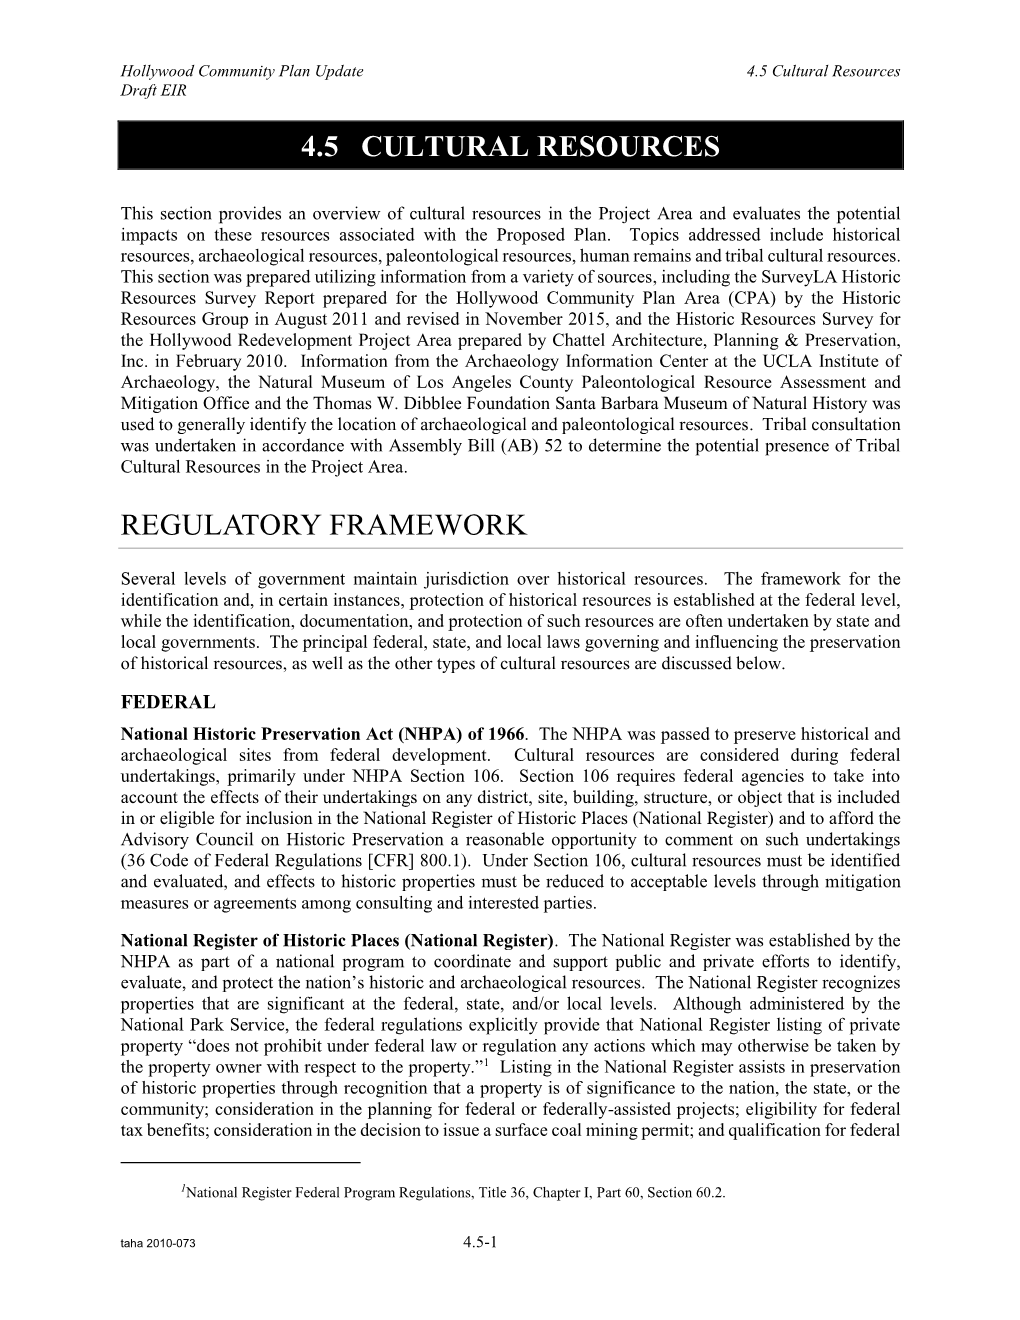 4.5 Cultural Resources Regulatory Framework